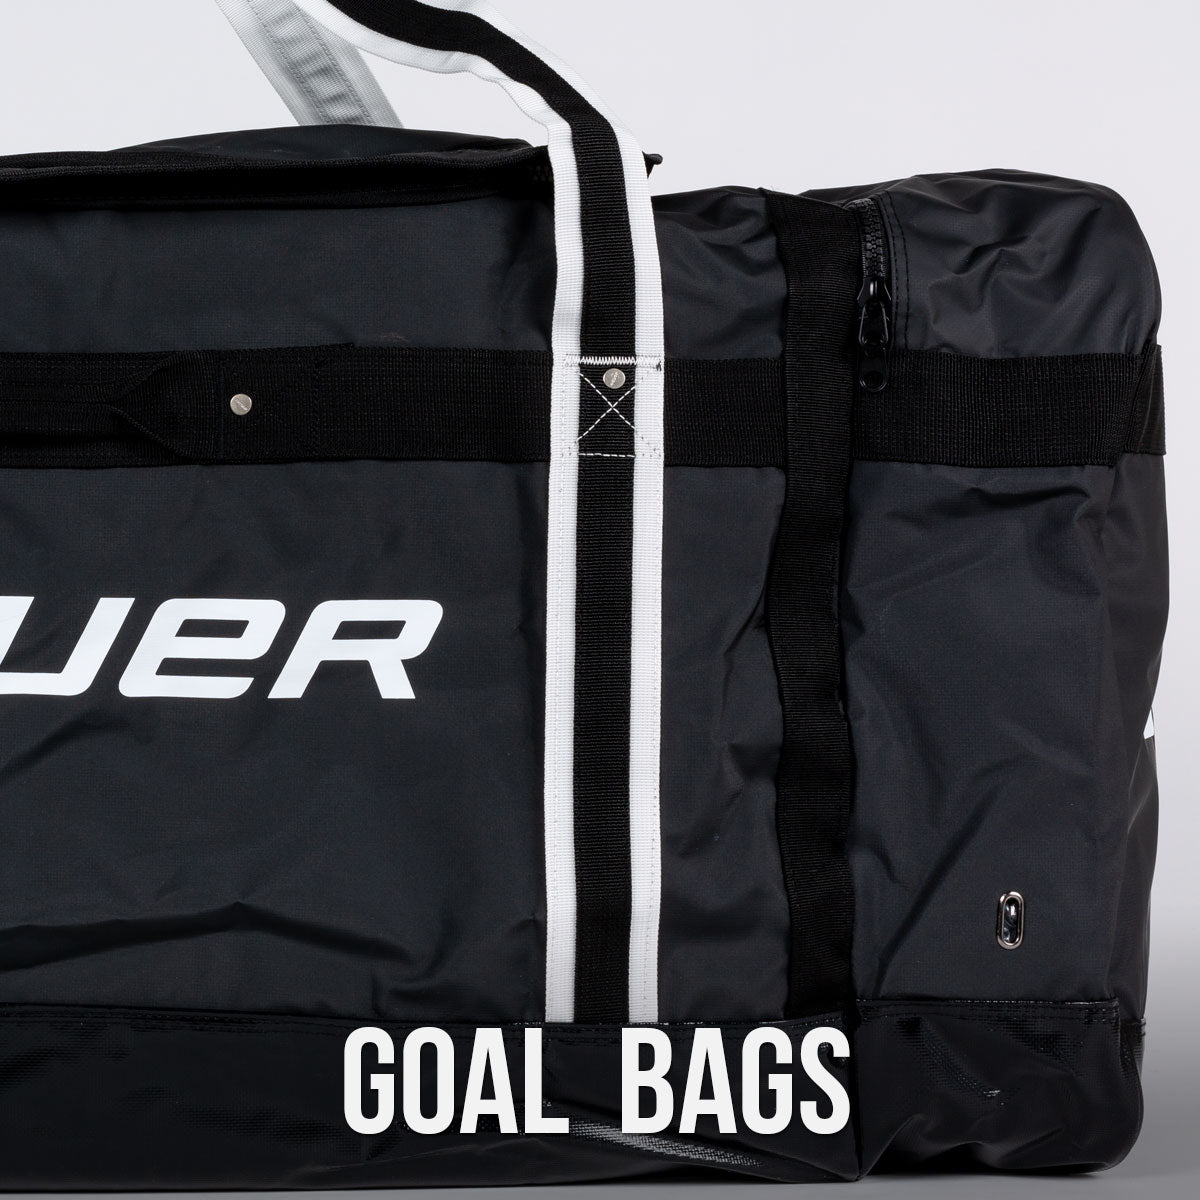 Bauer goal Bags